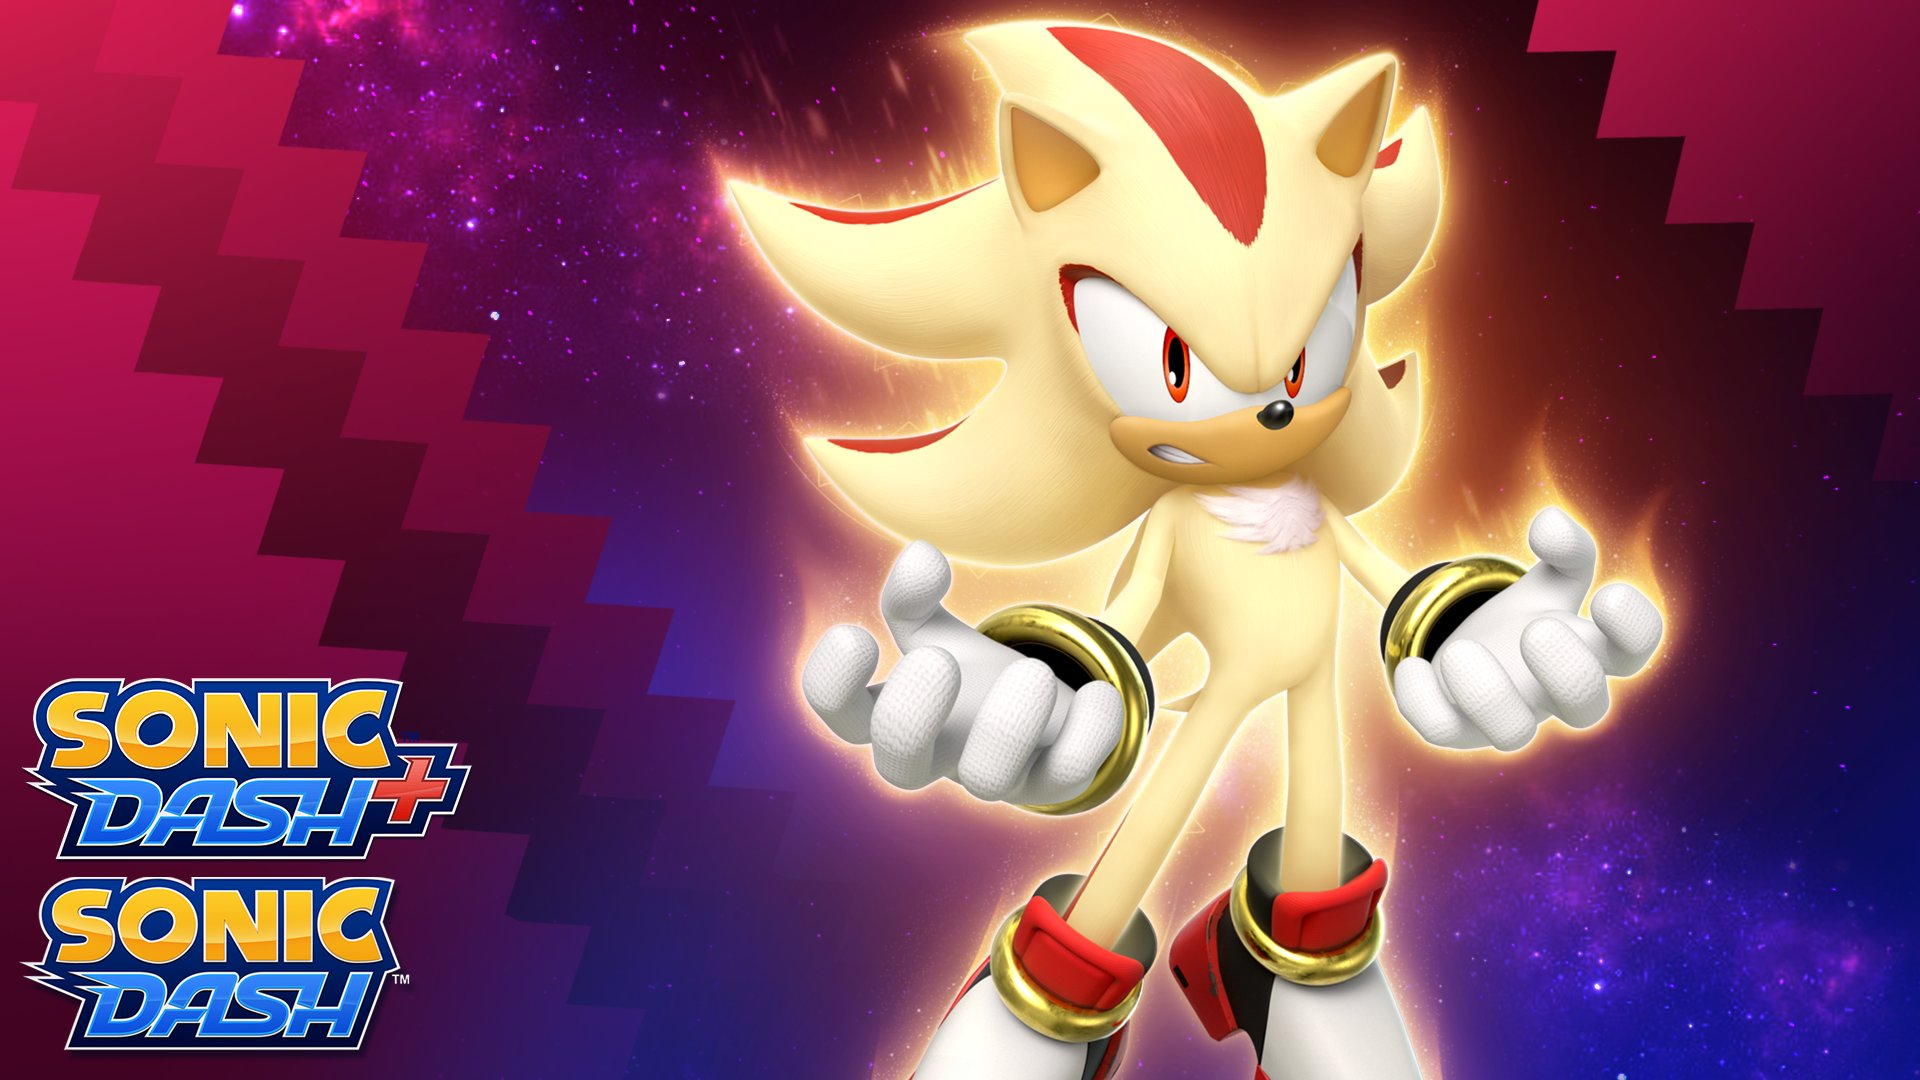 Sonic Dash+: Super Shadow Boost Event